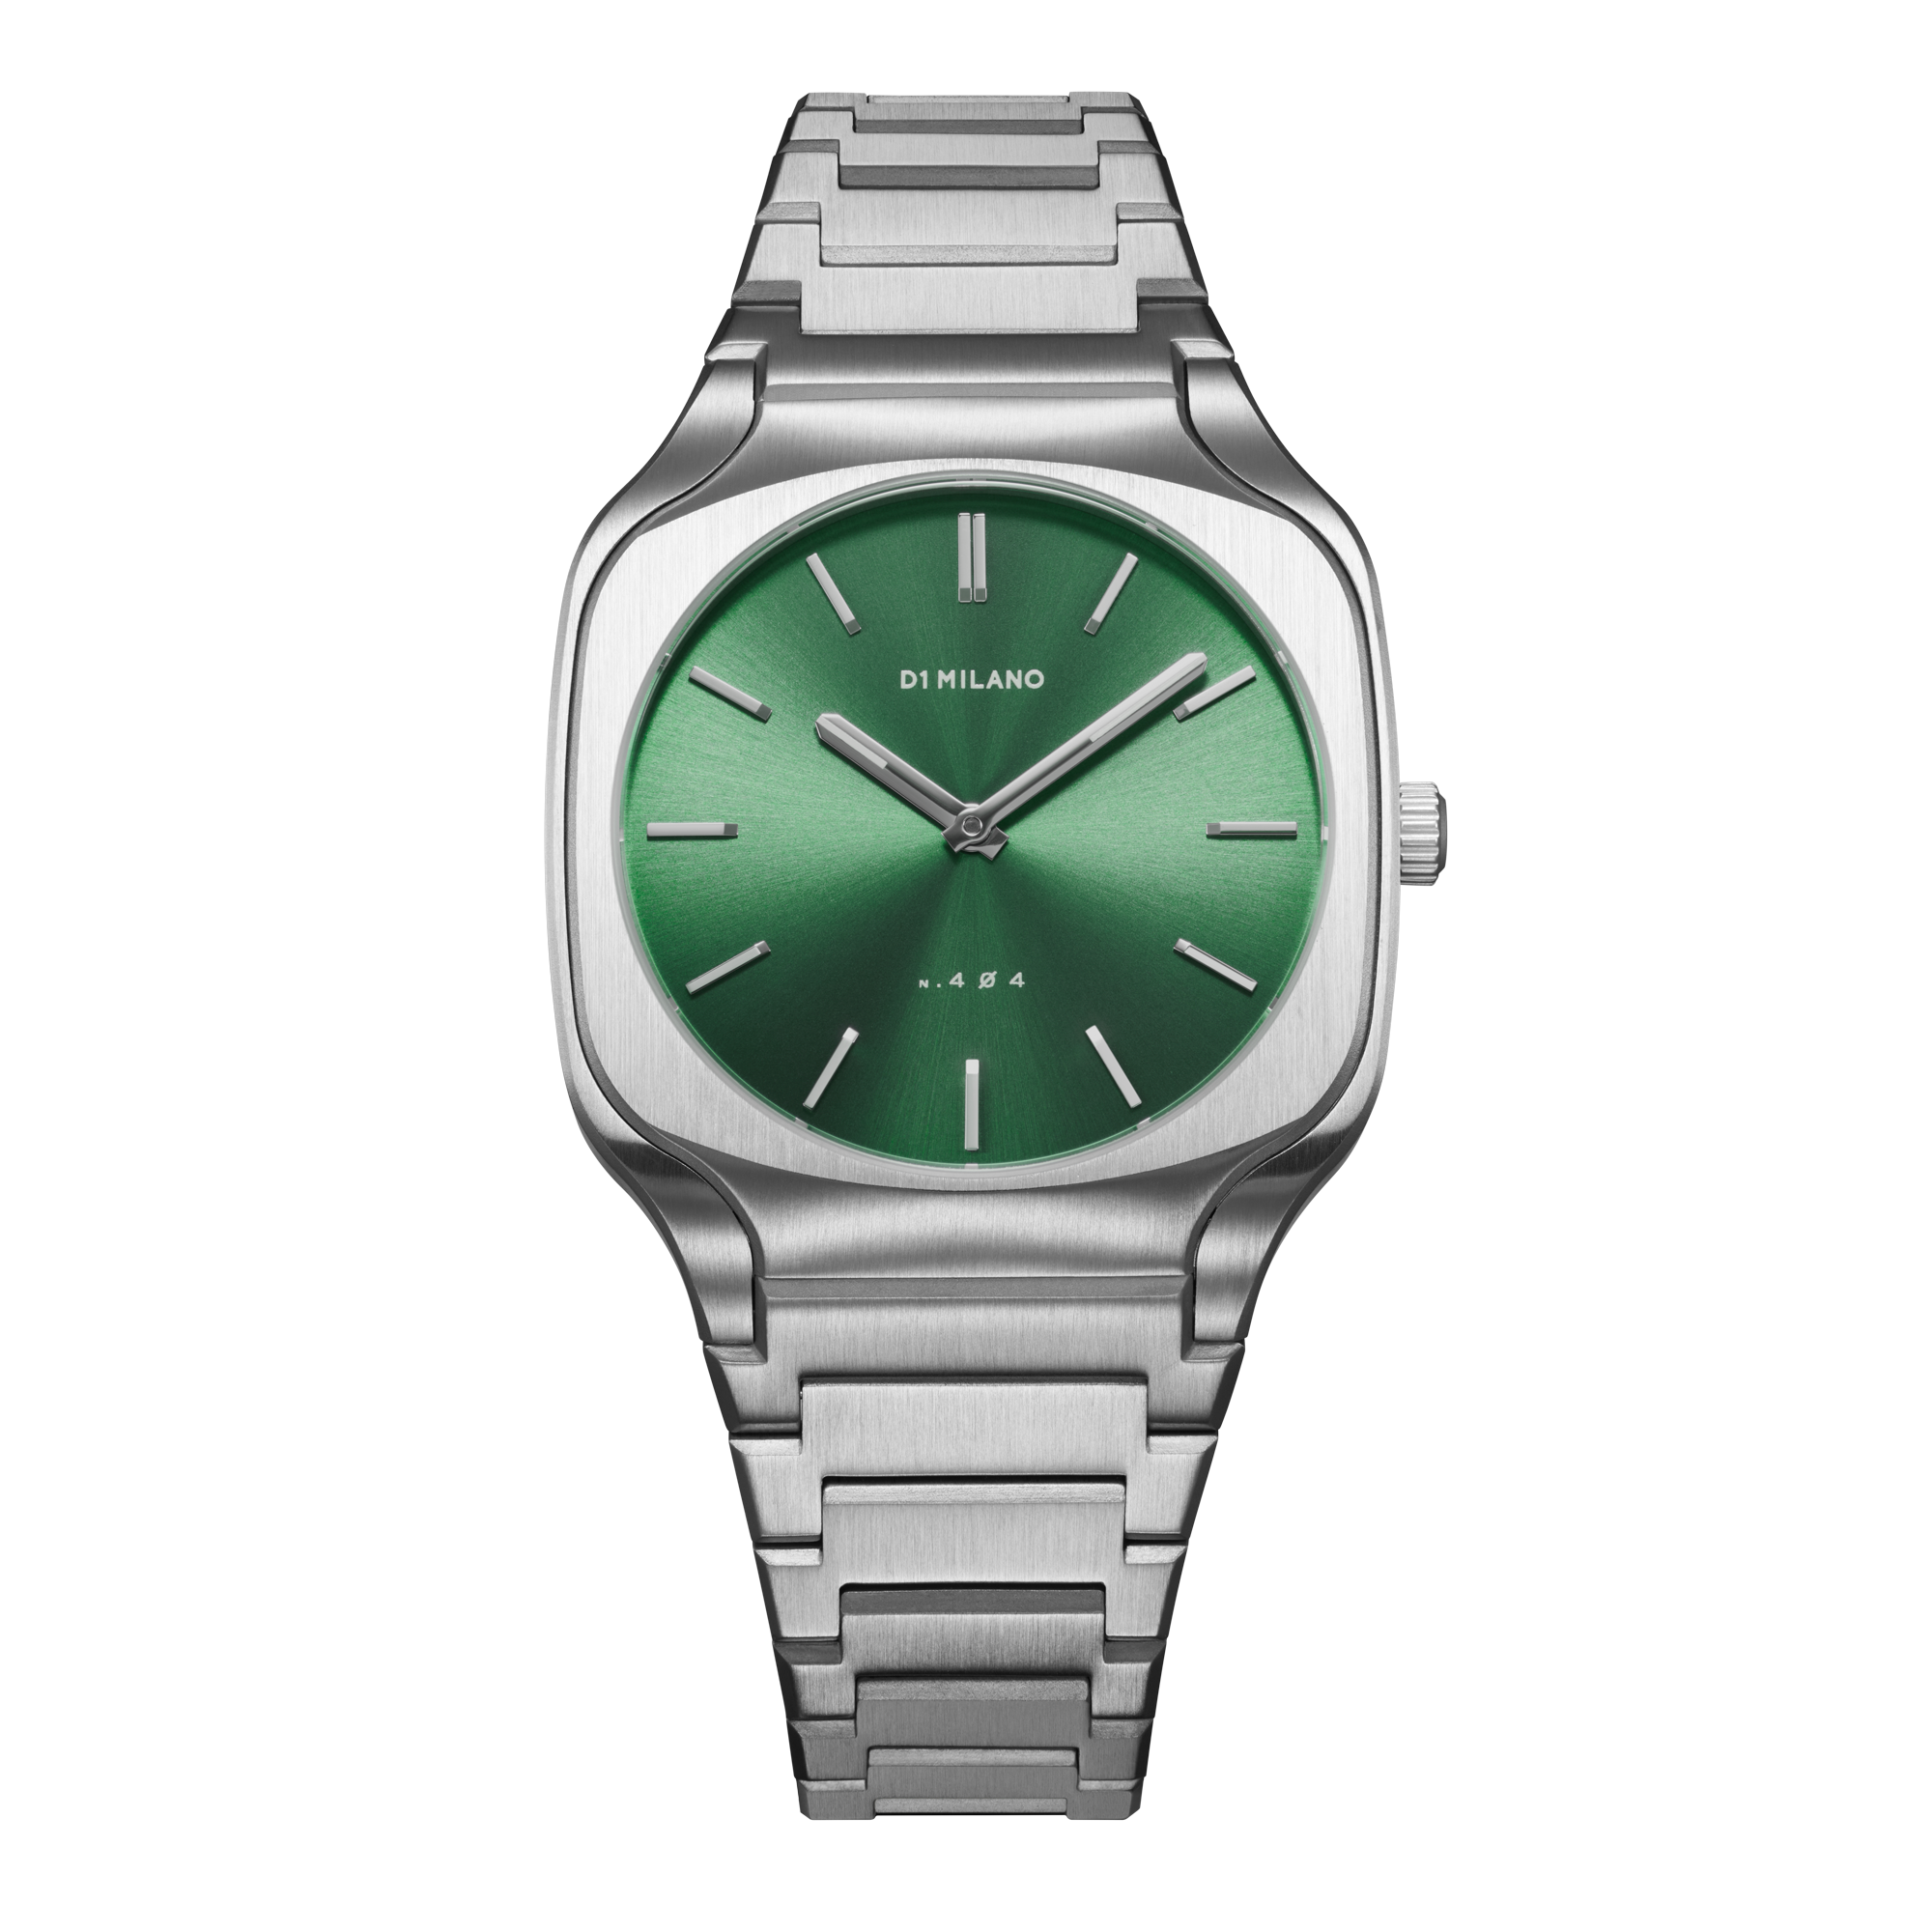 D1 Milano Men's Watch, Quartz Movement, Green Dial - ML-0321